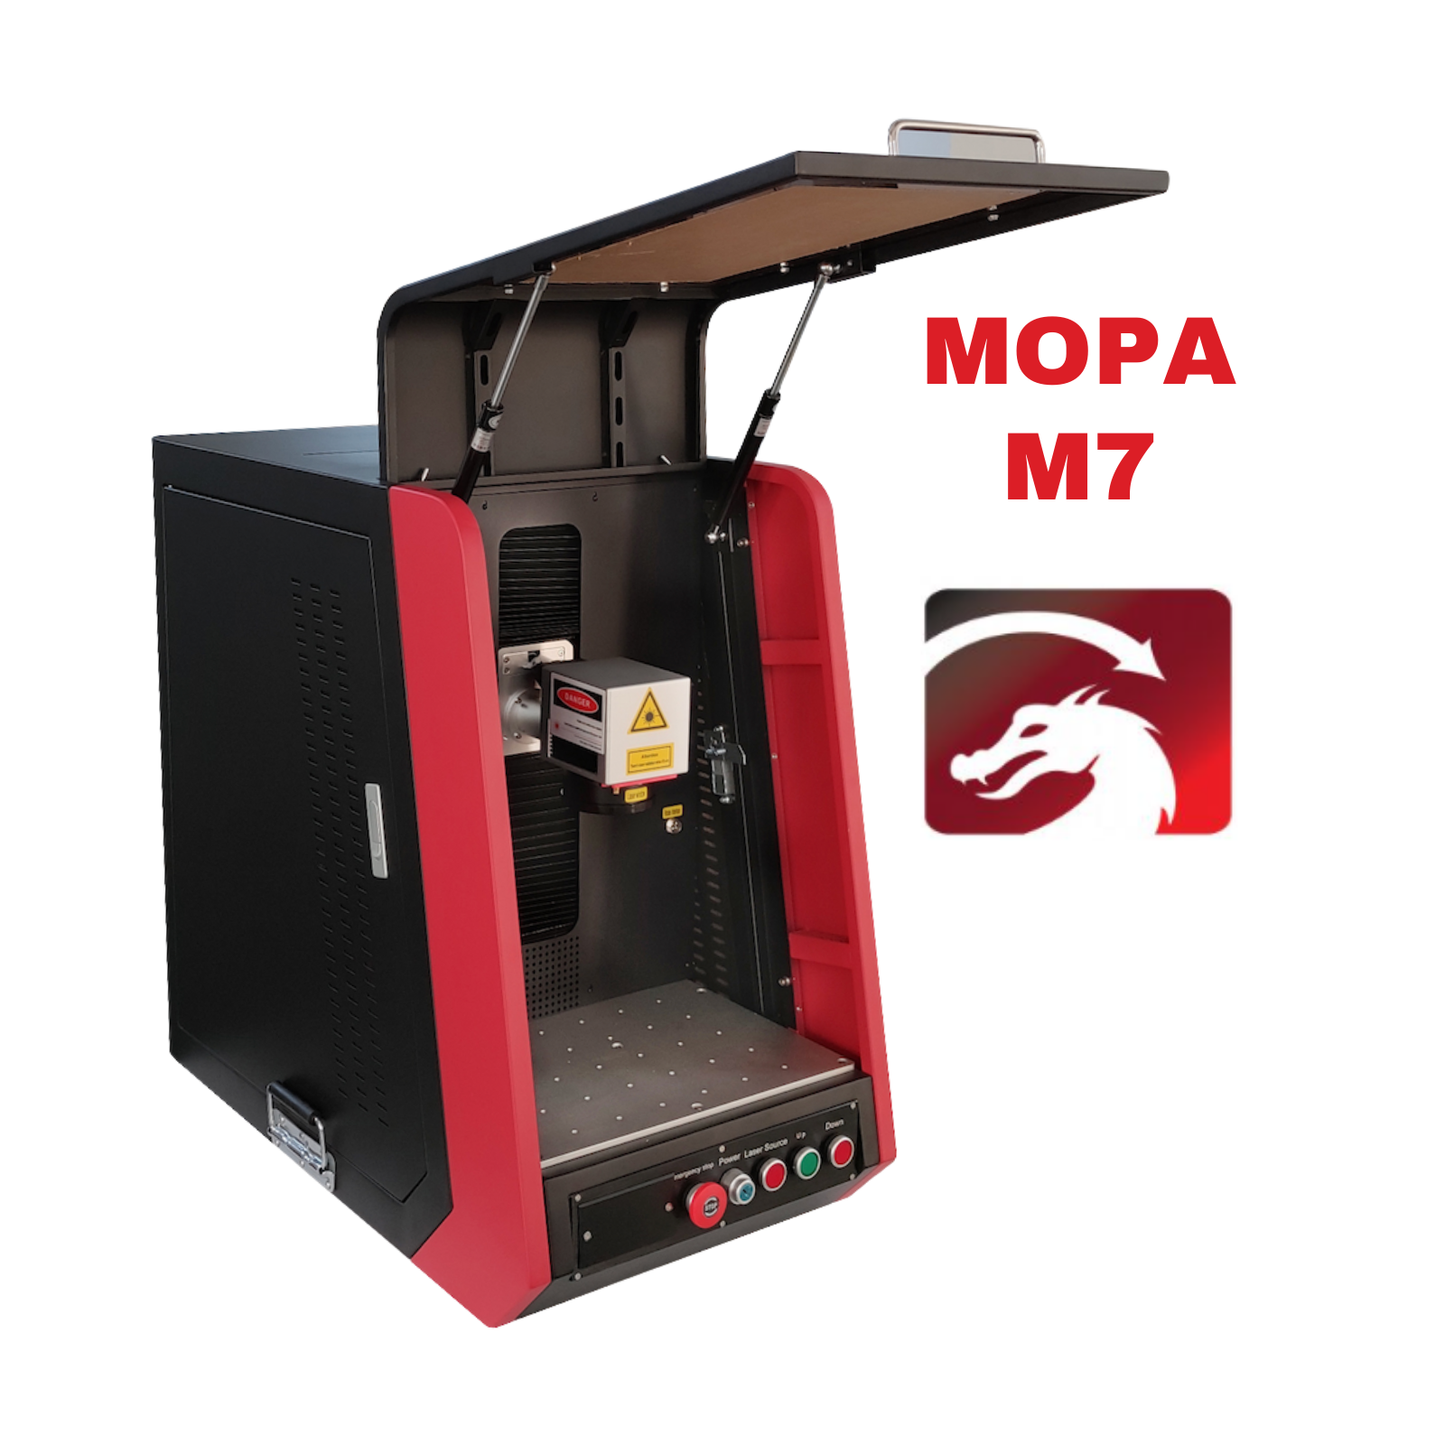 60W MOPA JPT M7 Fiber Laser Engraver Marking Machine